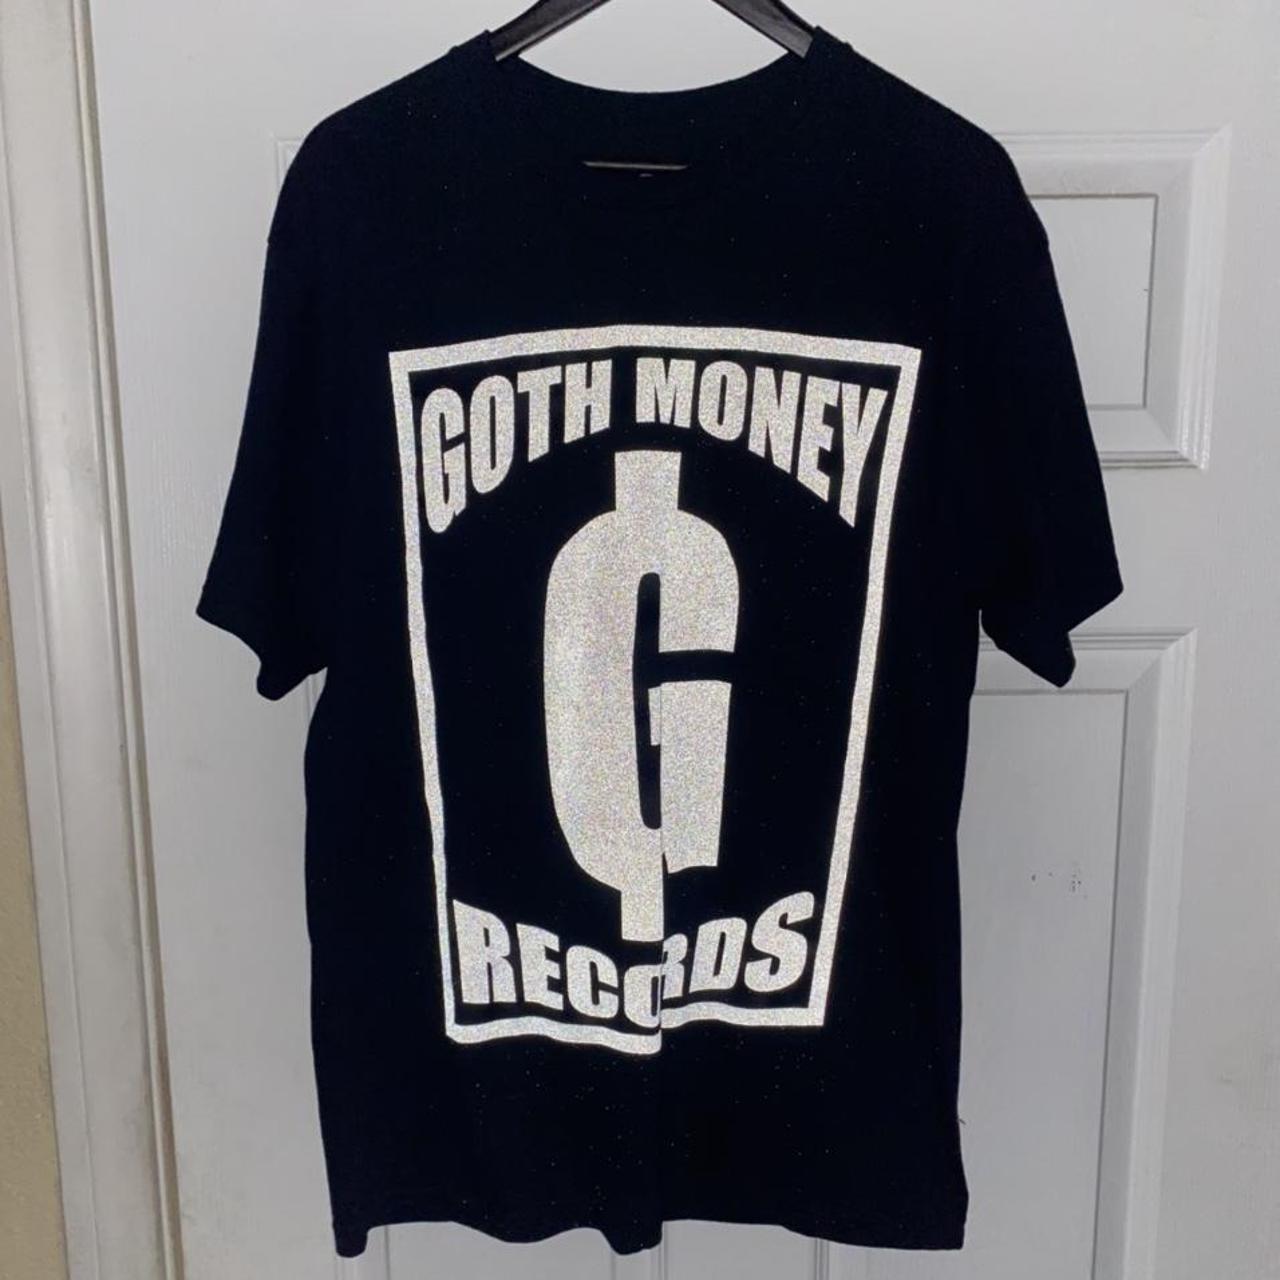 Reflective goth money records logo t shirt in... - Depop